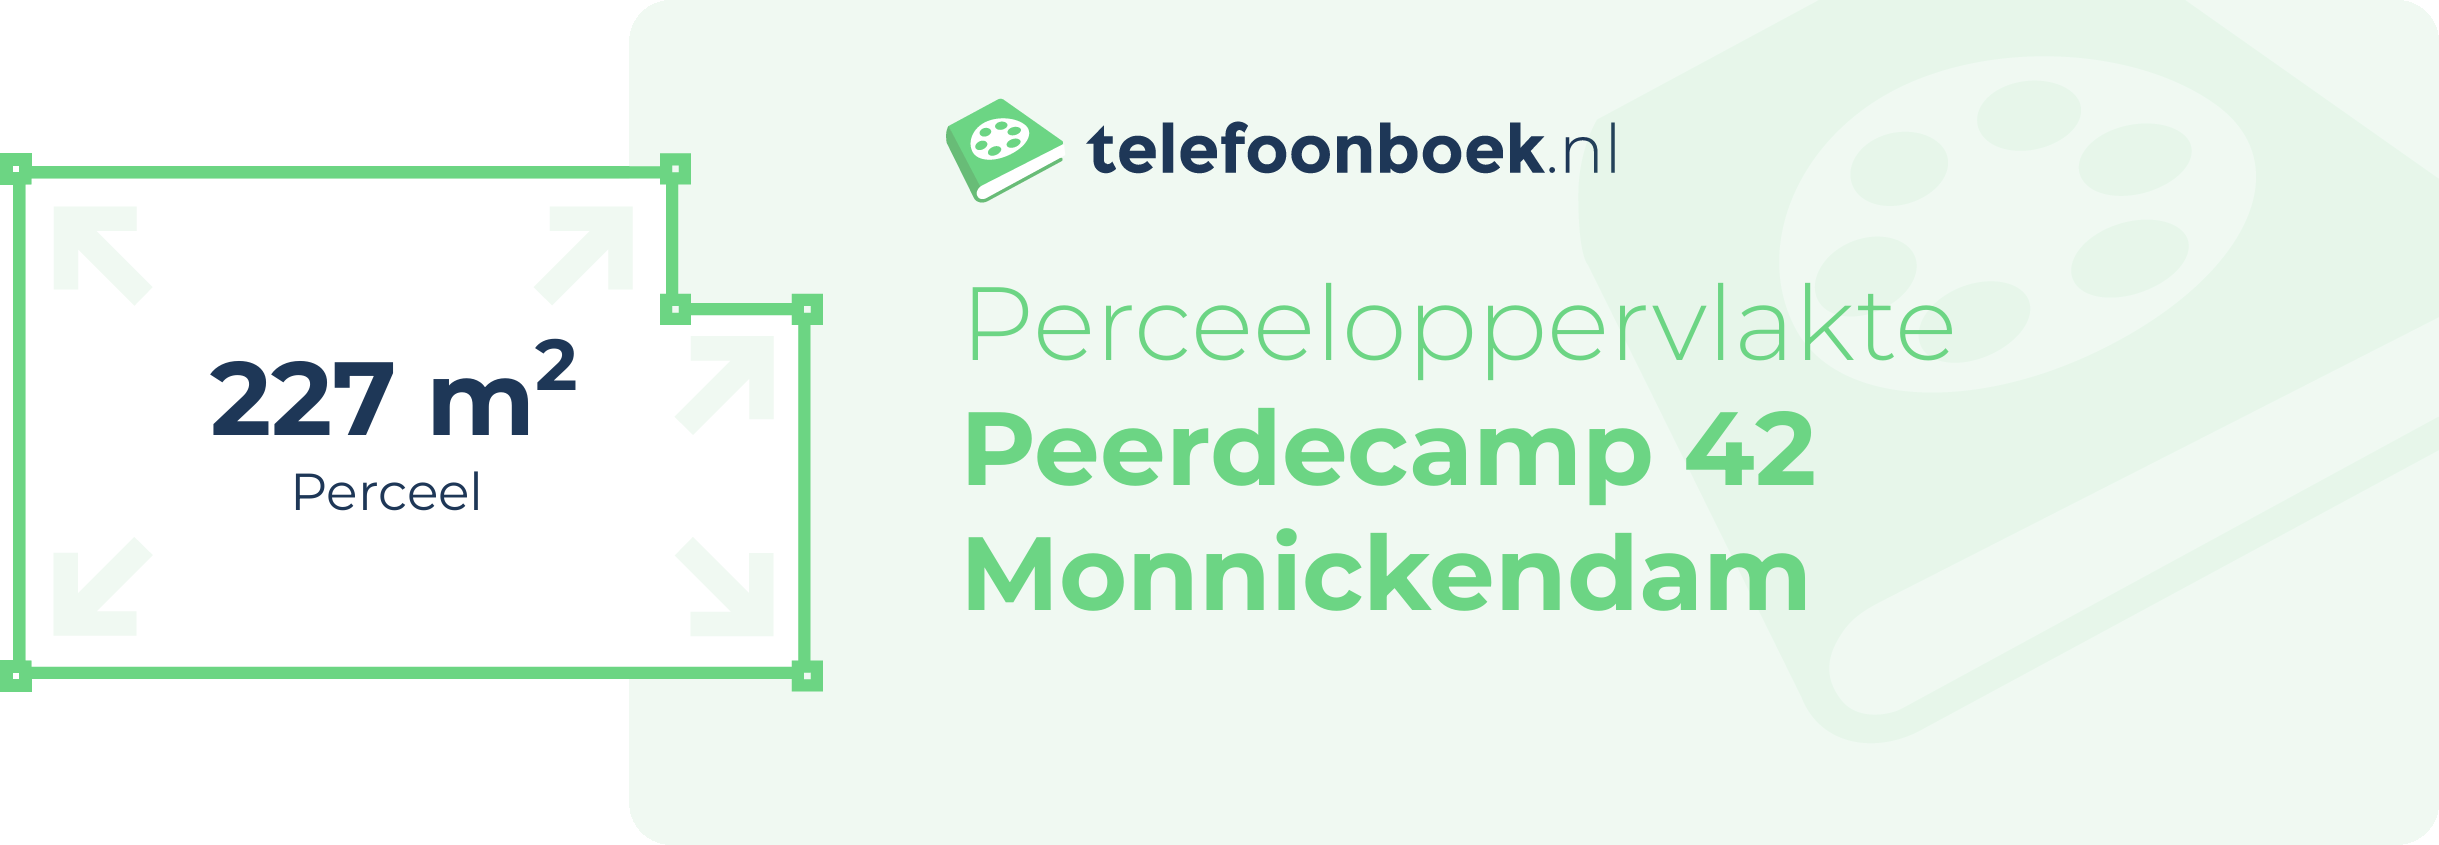 Perceeloppervlakte Peerdecamp 42 Monnickendam